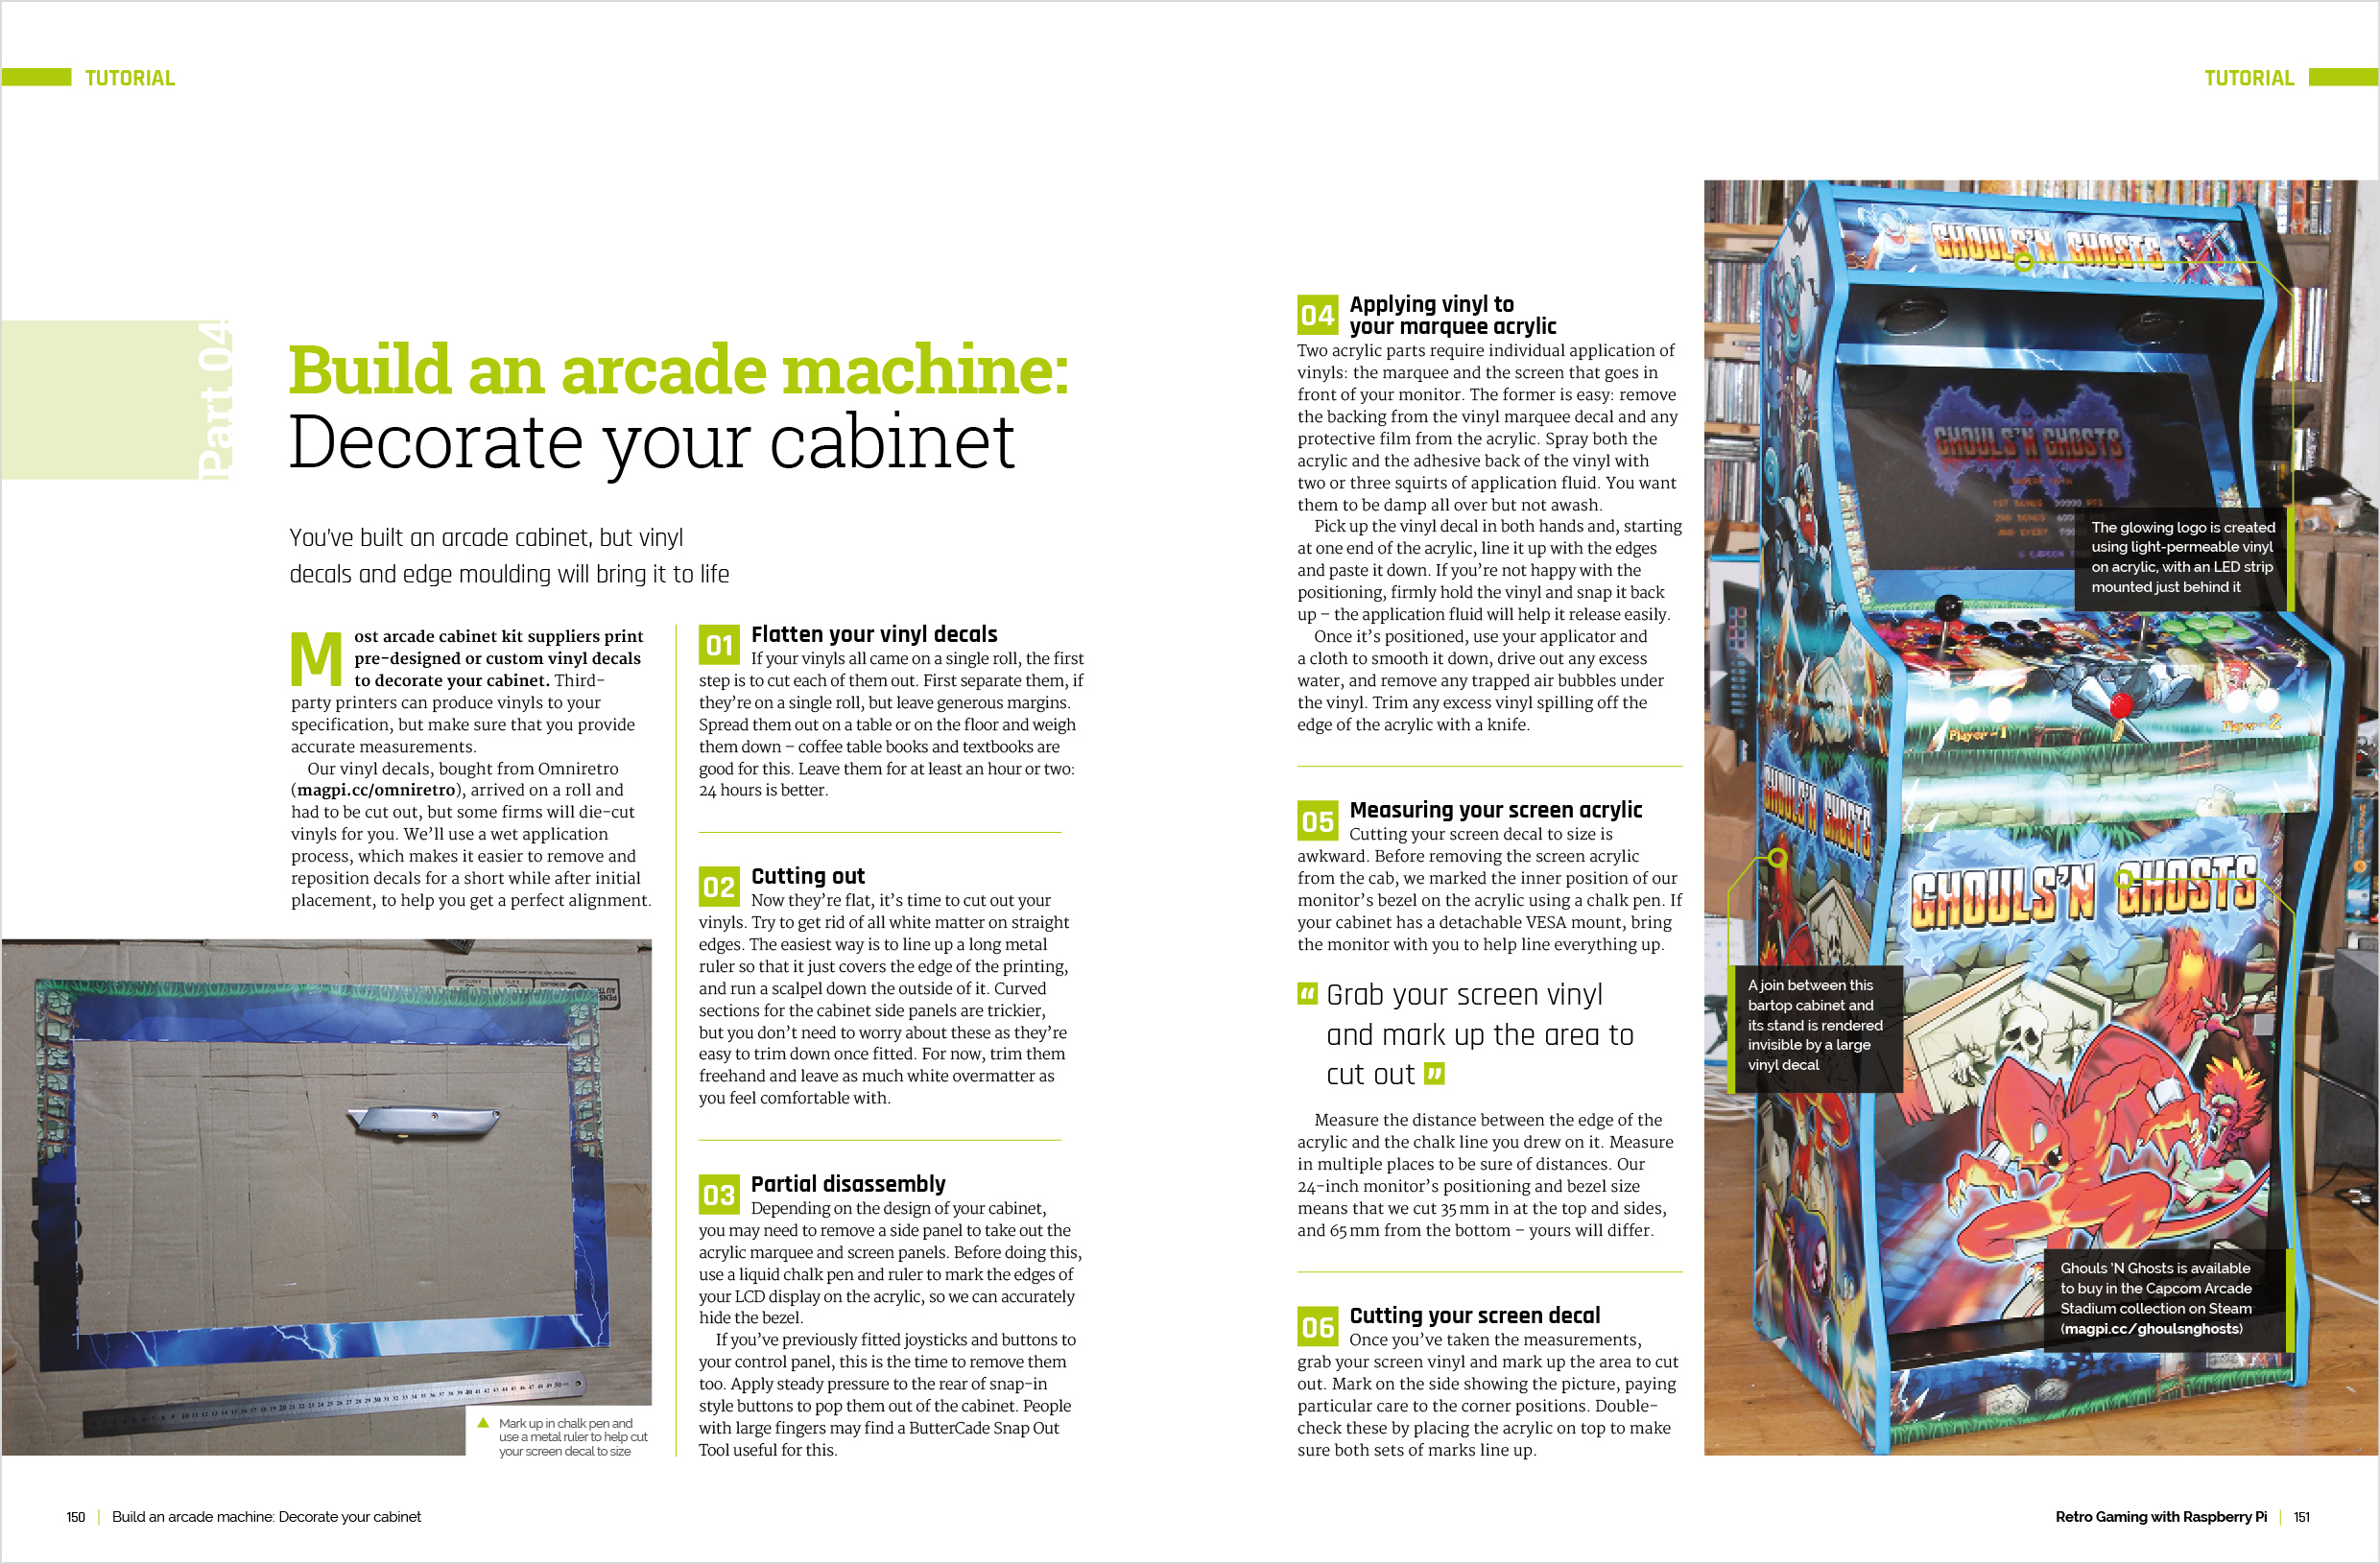 Build an arcade machine with Raspberry Pi